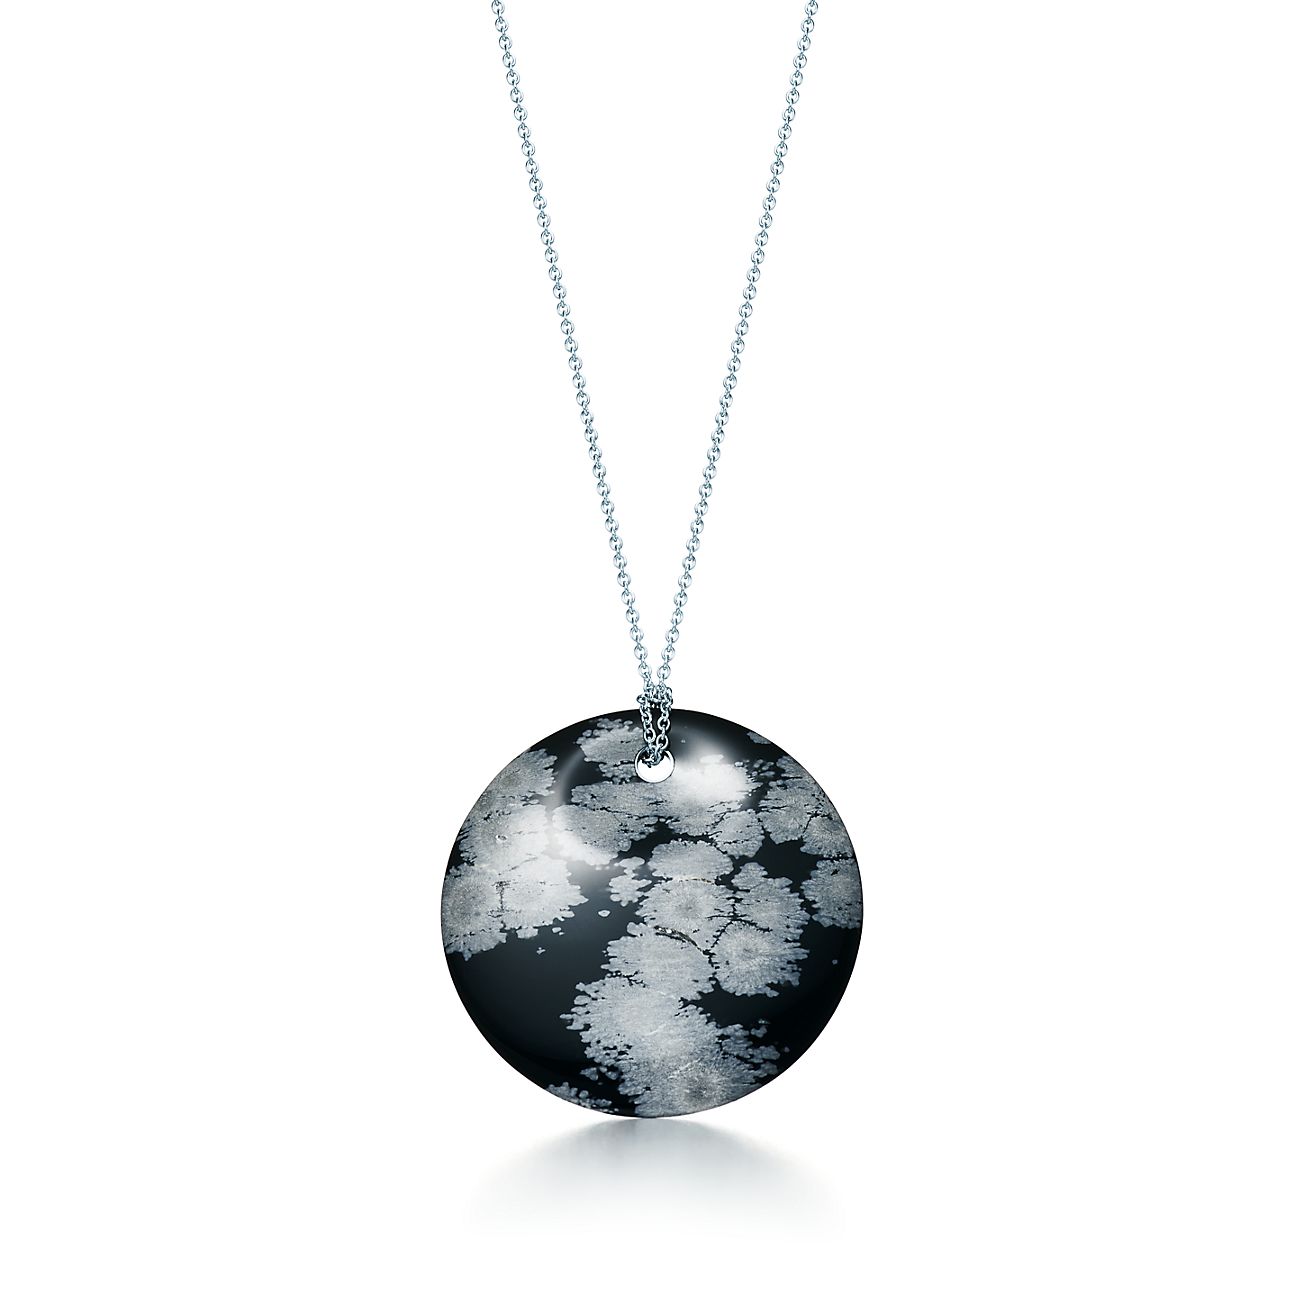 Snowflake obsidian in sterling silver pendant